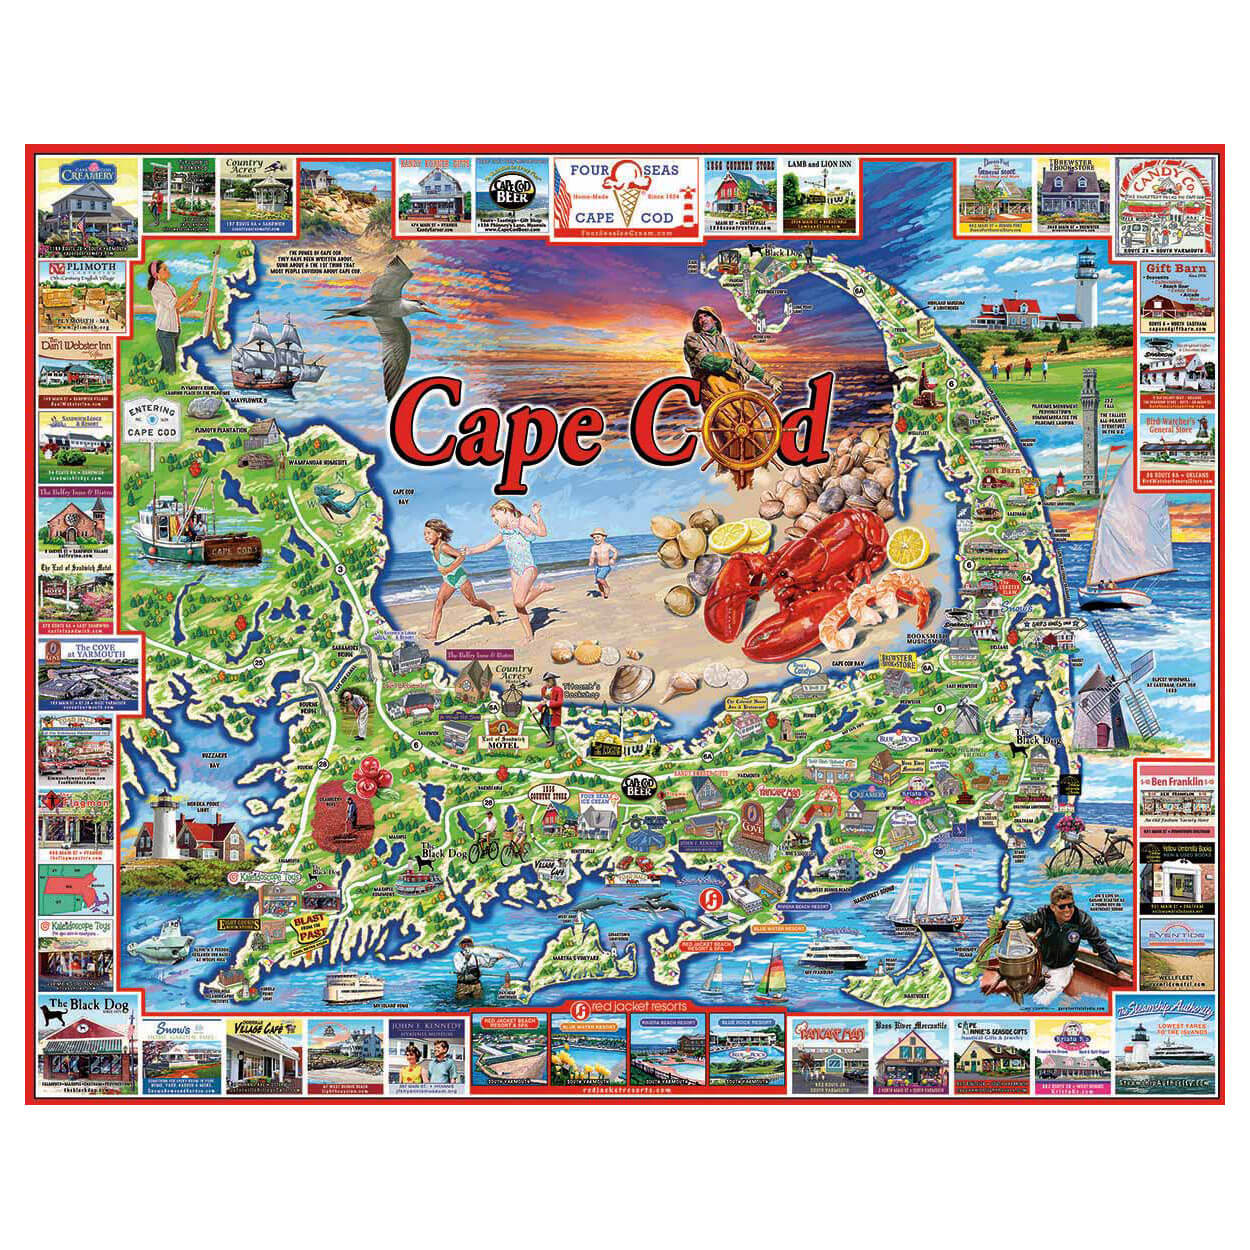 White Mountain Puzzles Cape Cod 1000 Piece Jigsaw Puzzle